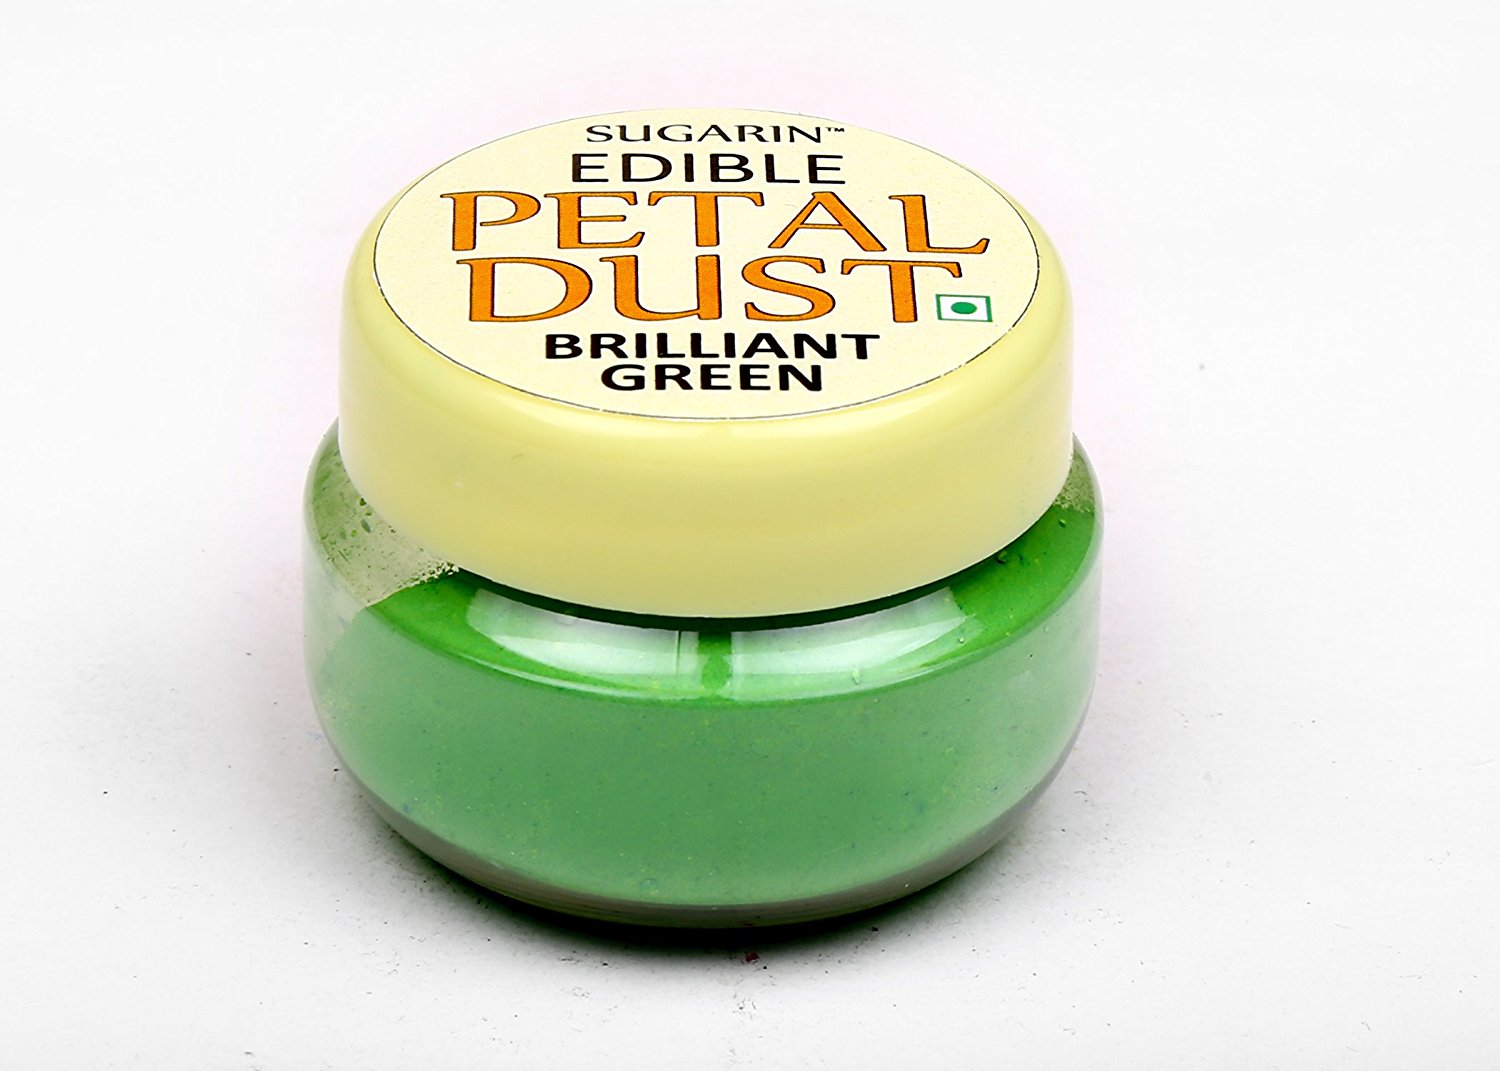 31706 SUGARIN Edible Petal Dust, Brilliant Green, 4.25 gram